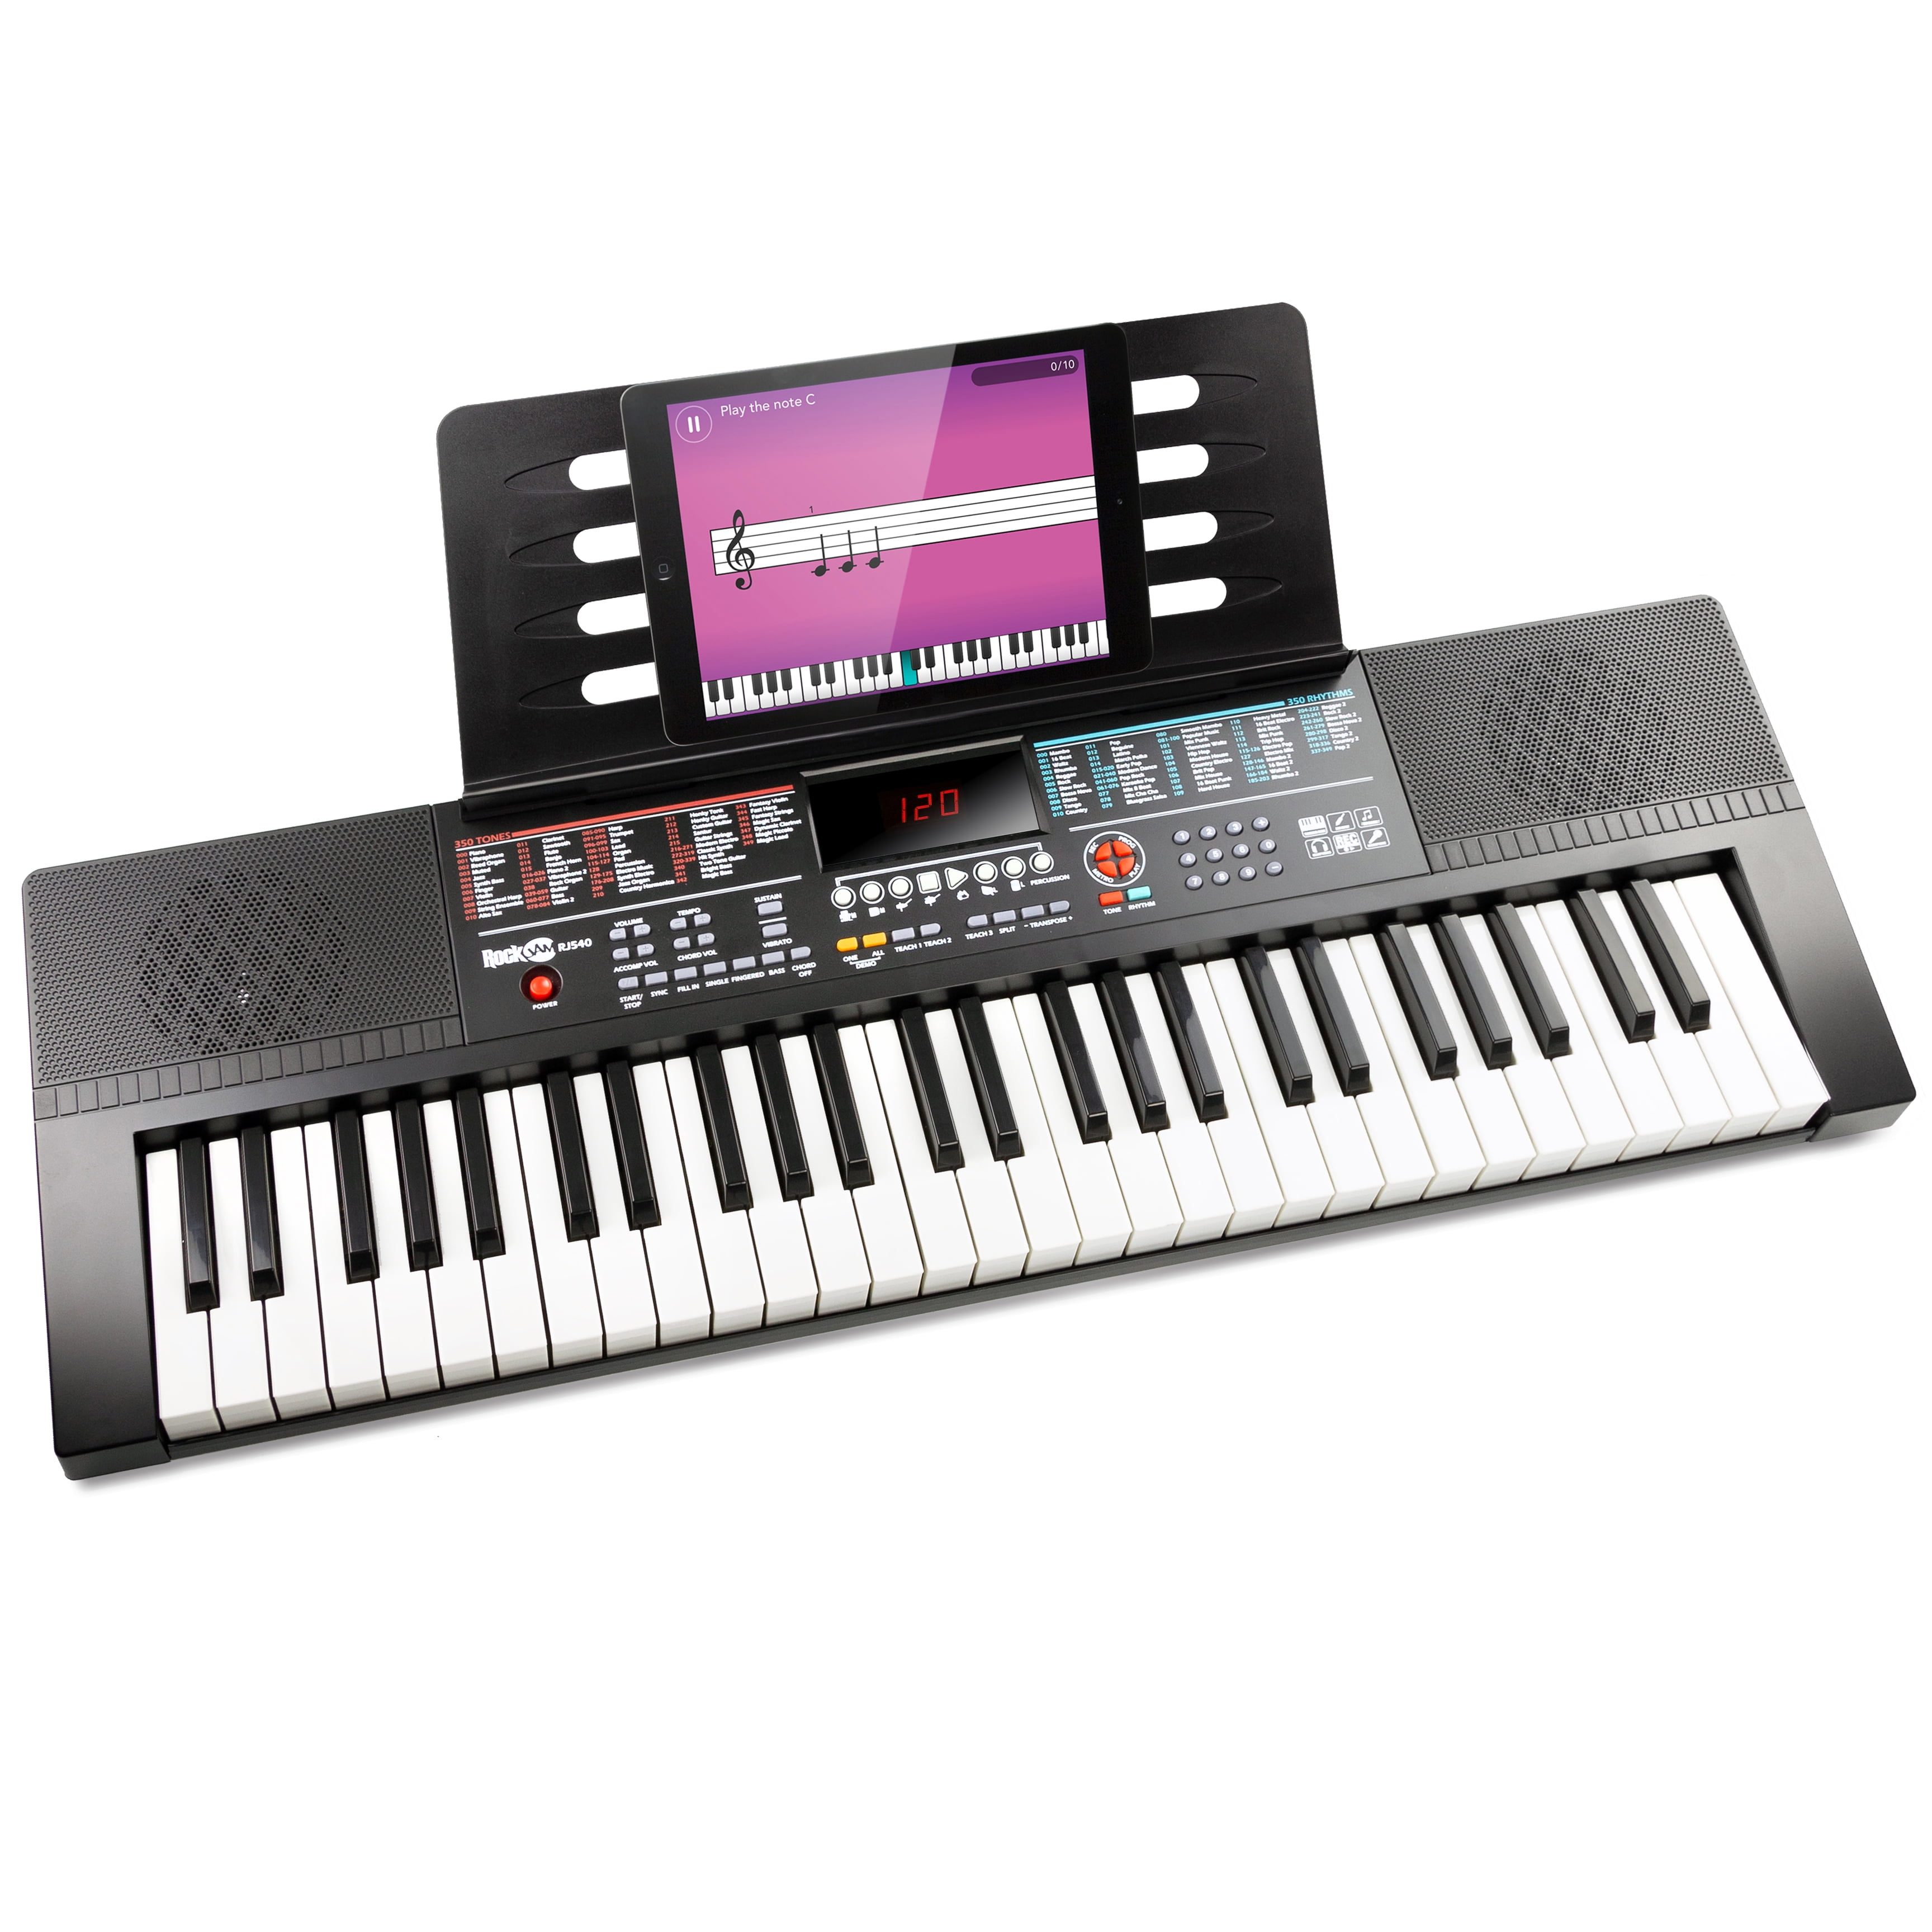 RockJam 61-Key Black Keyboard Piano with Sheet Music Rest, Piano